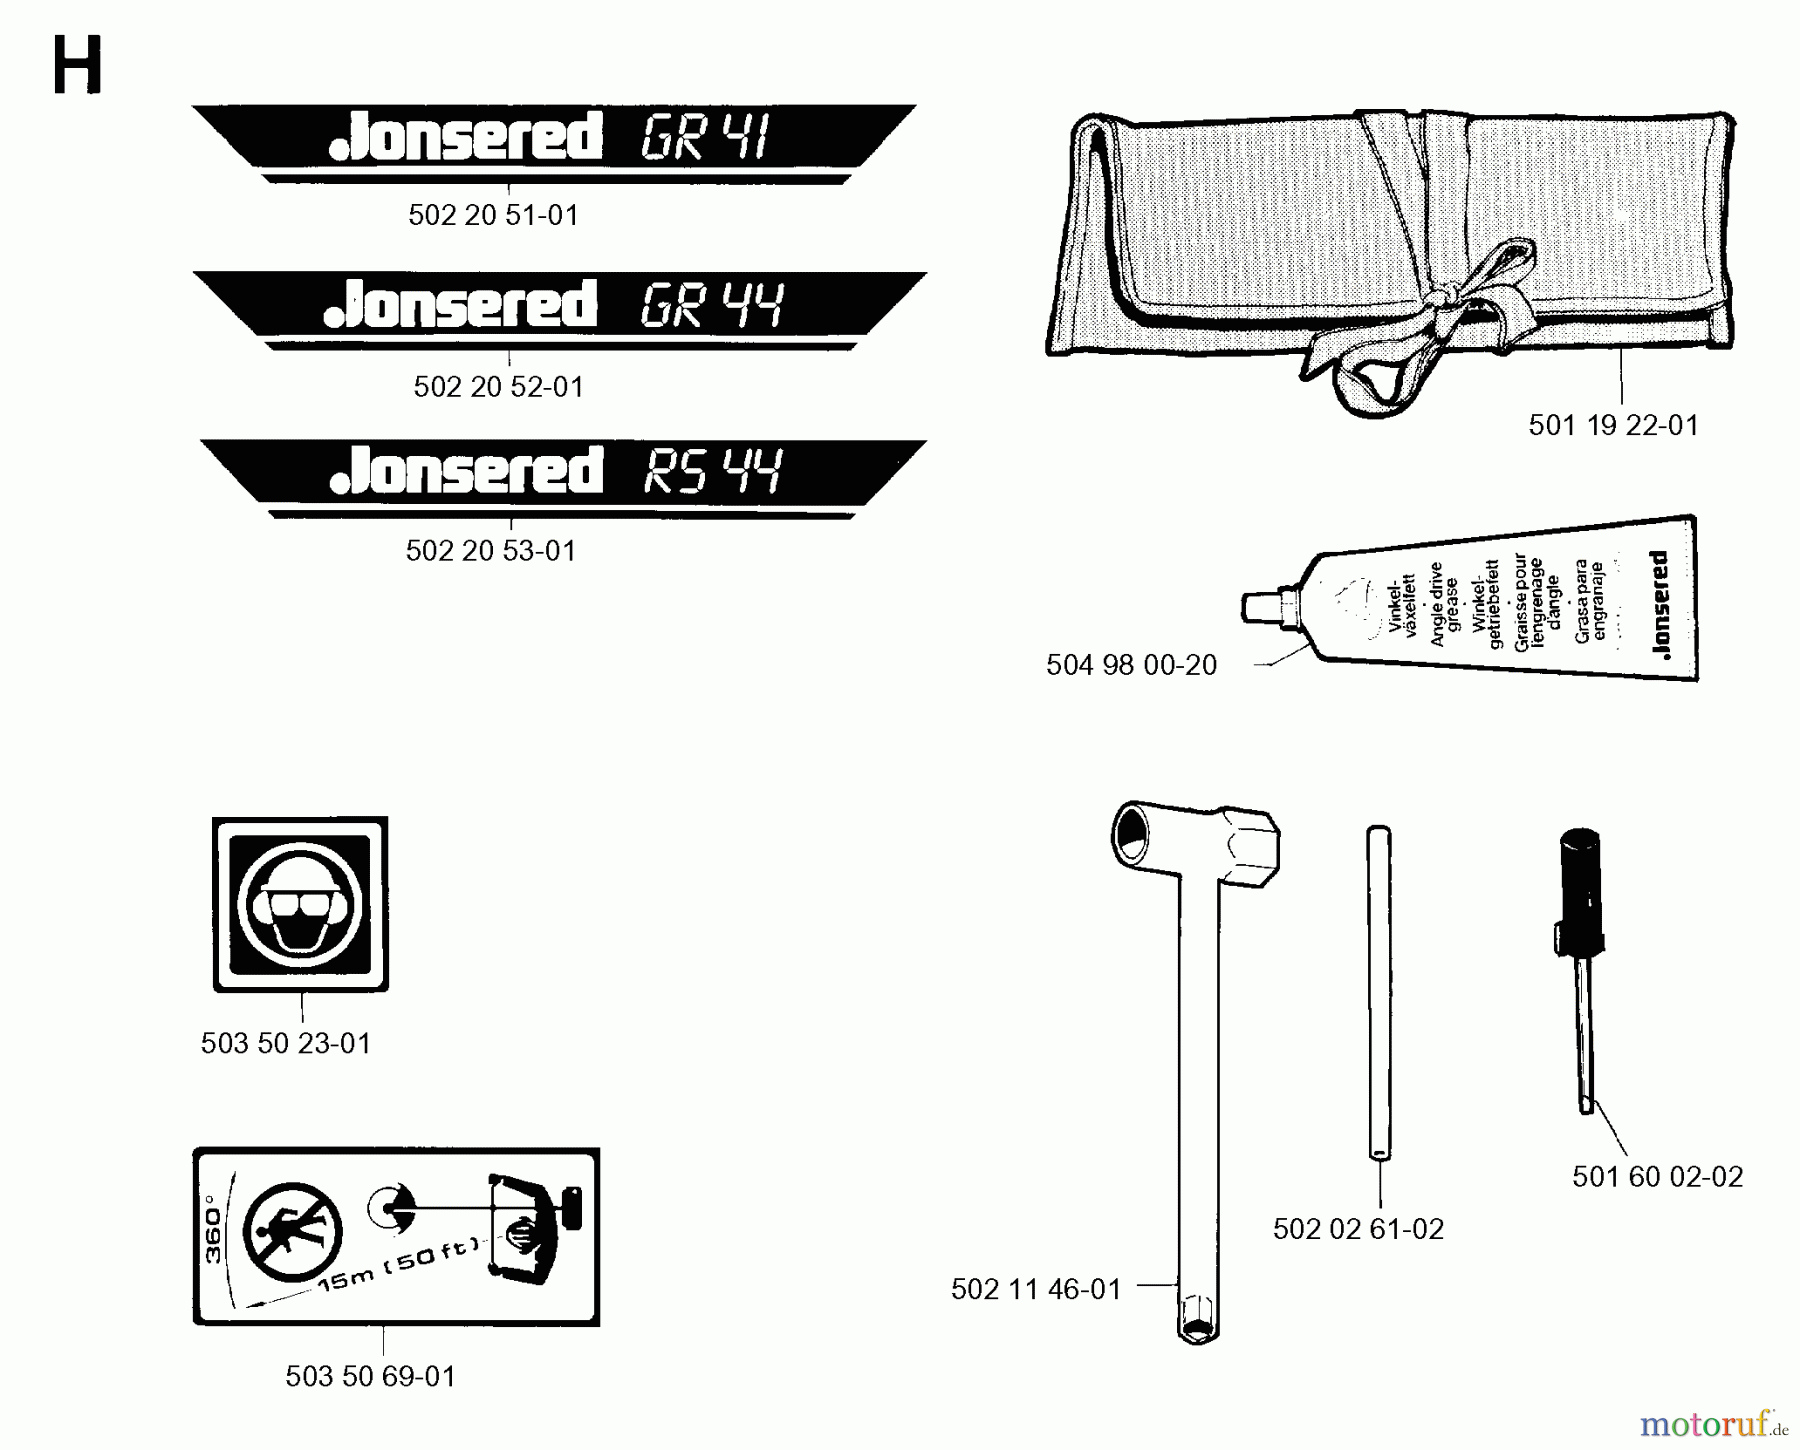  Jonsered Motorsensen, Trimmer GR44 - Jonsered String/Brush Trimmer (1991-03) ACCESSORIES #2